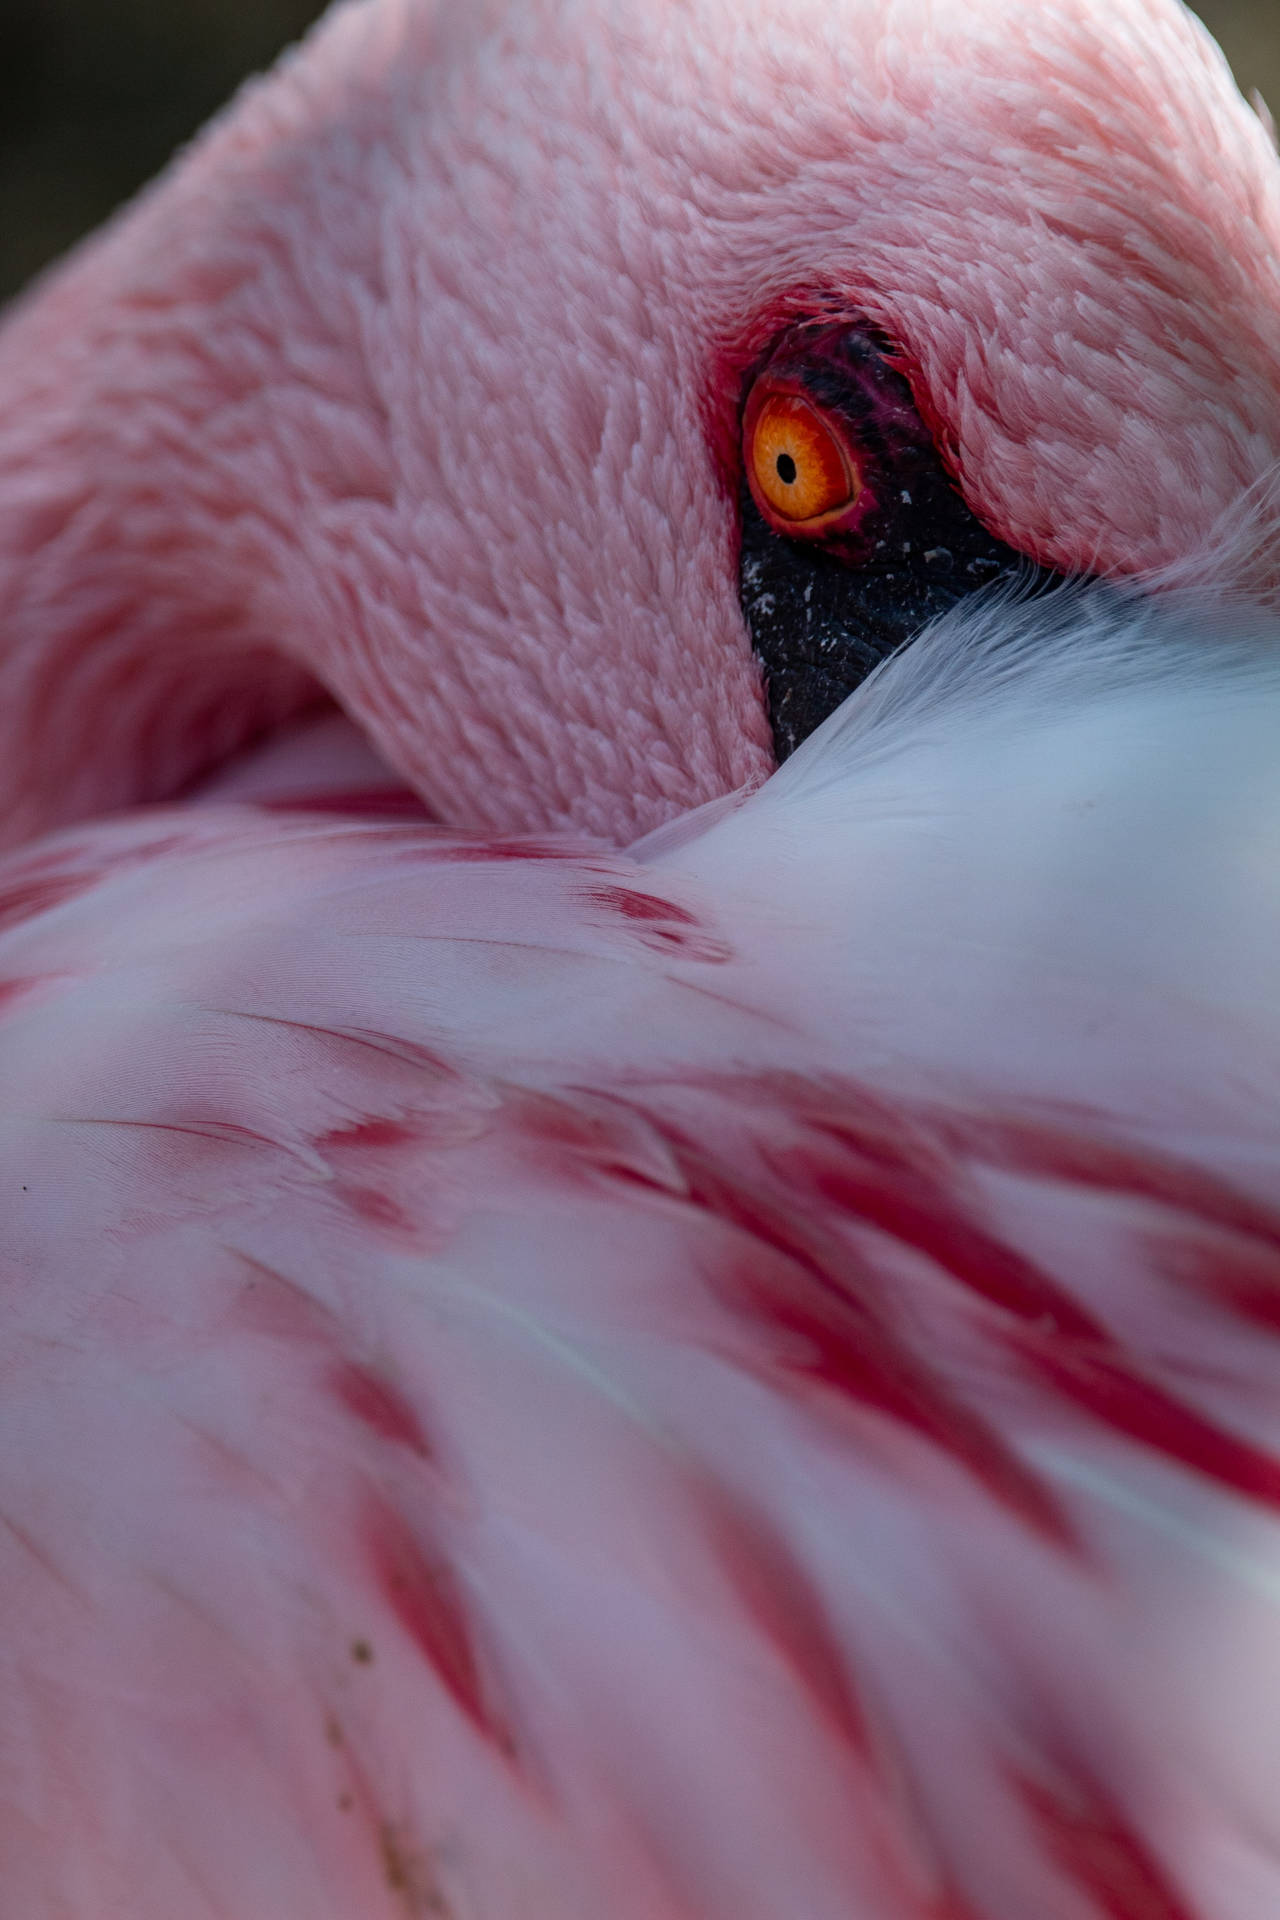 Eye Of A Pink Flamingo Wallpaper